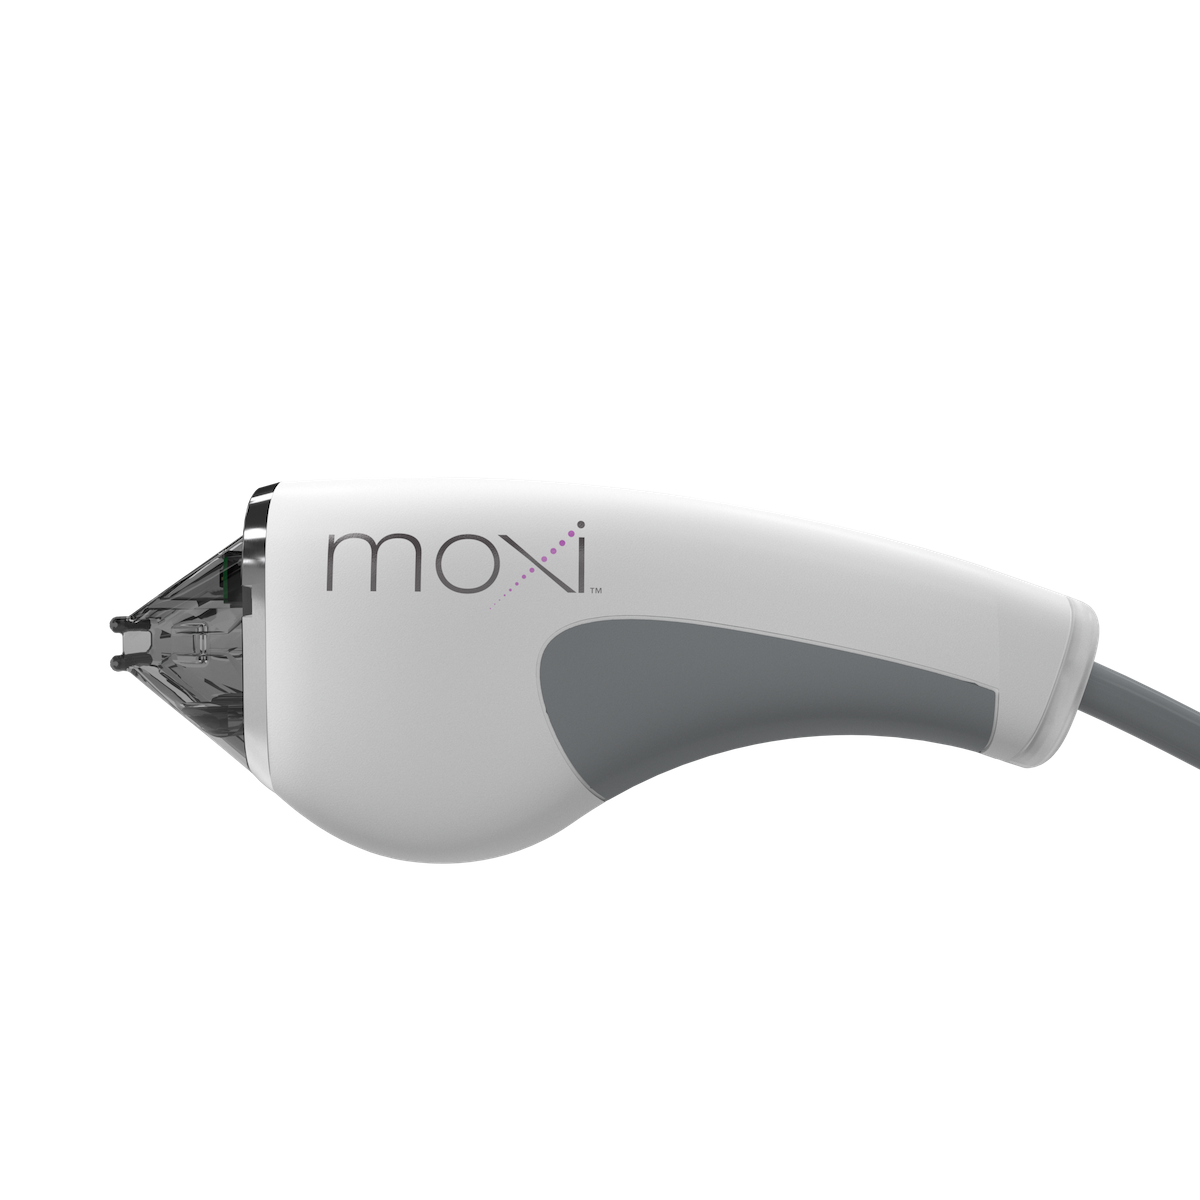 Moxi device side view